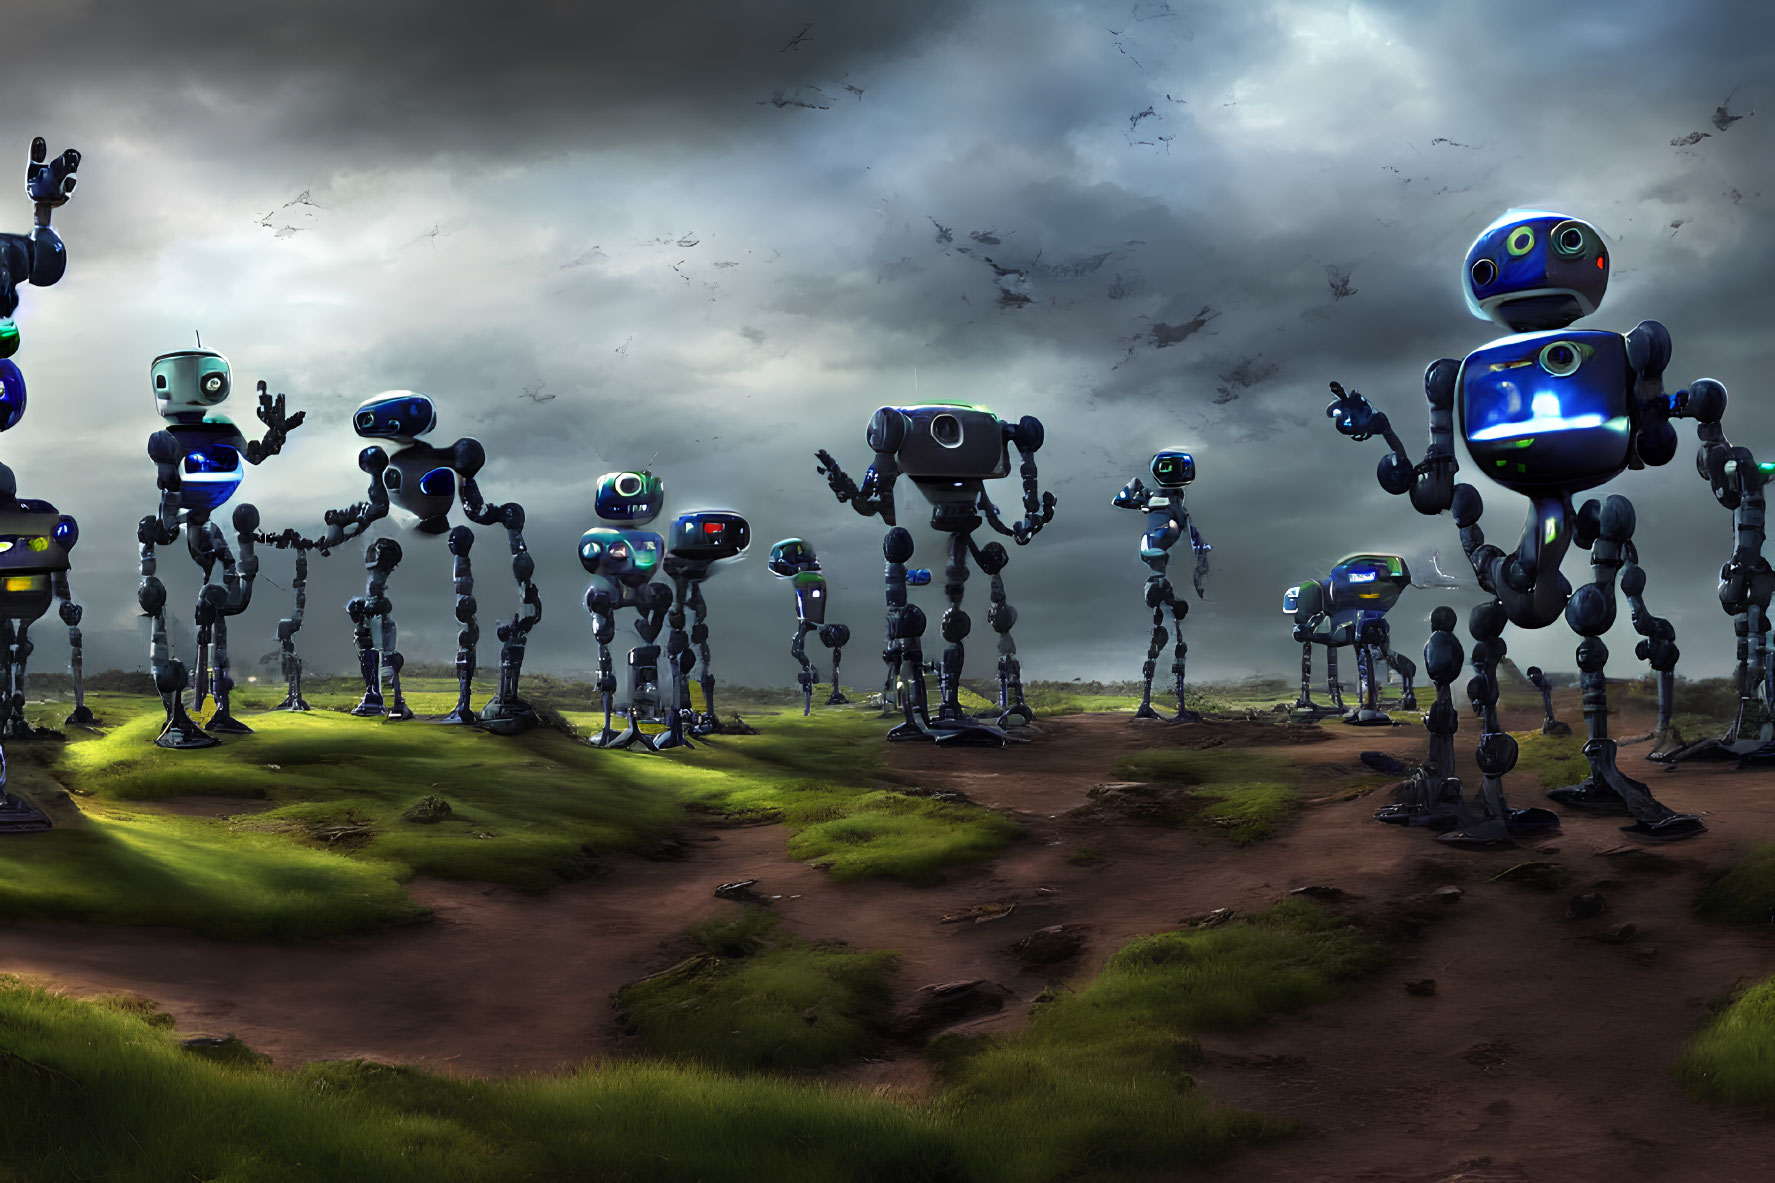 Stylized robots with expressive eyes on apocalyptic landscape